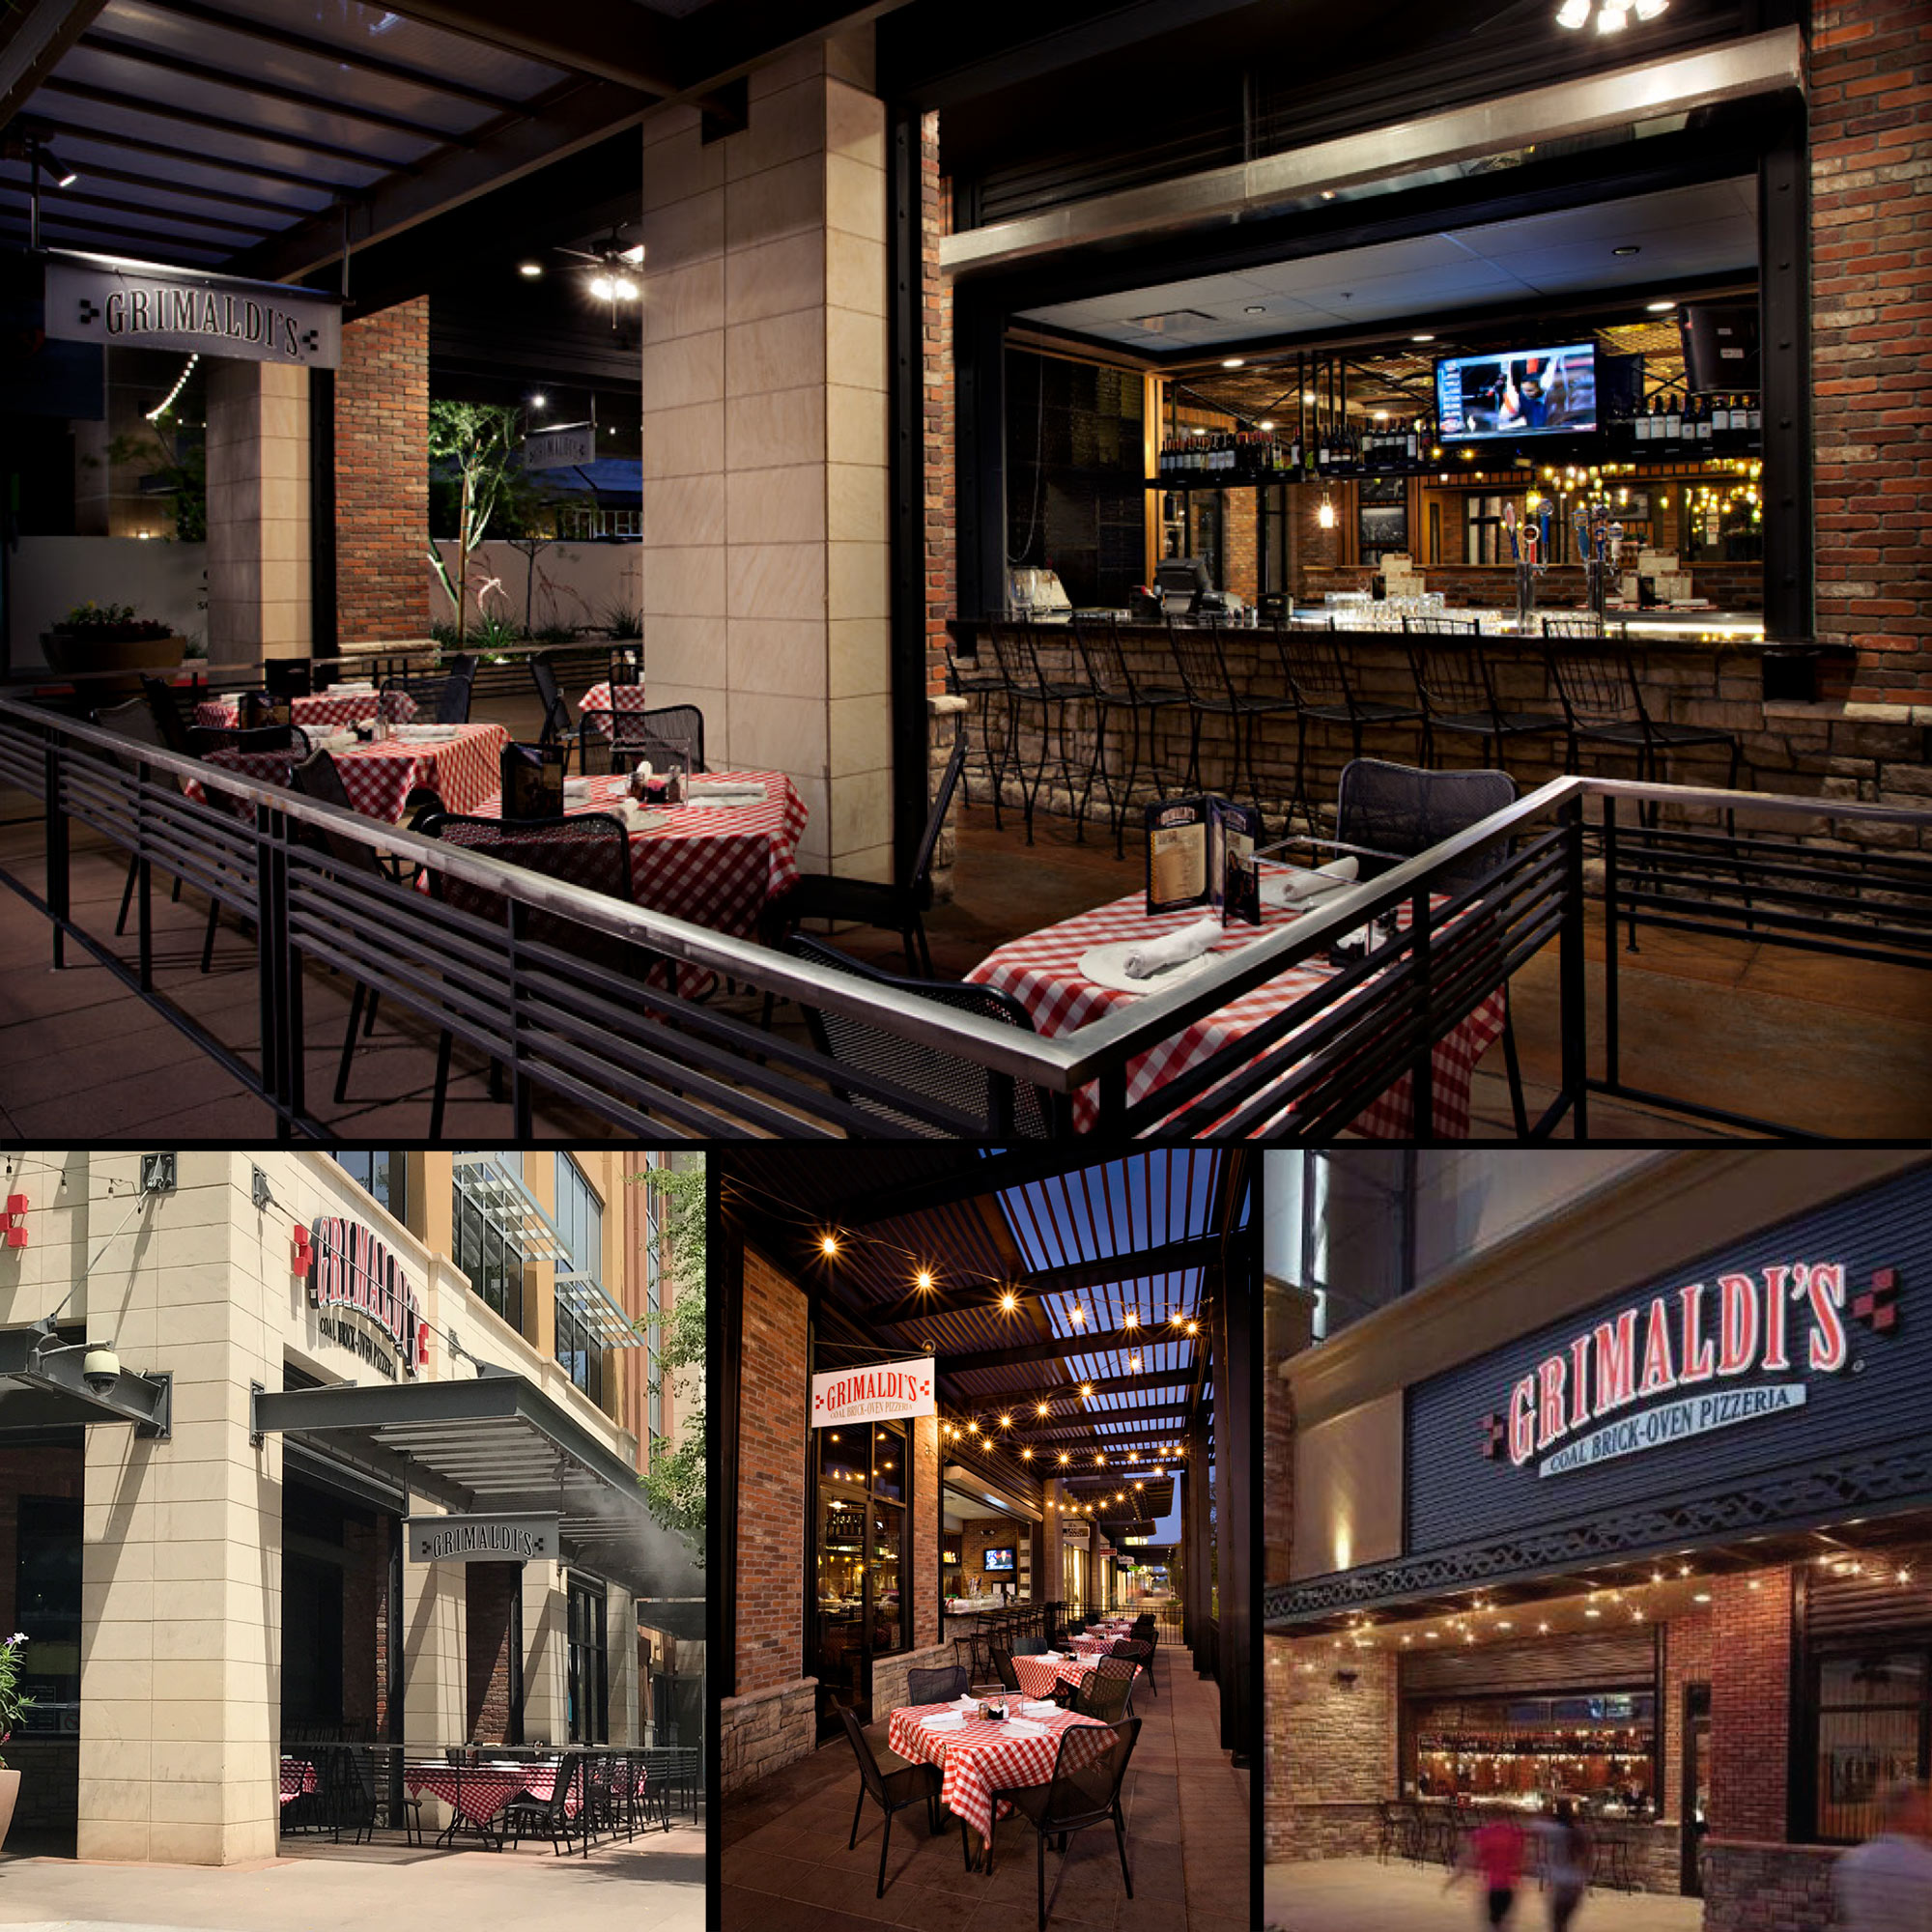 Collage of interior and exterior views of Grimaldi's restaurants